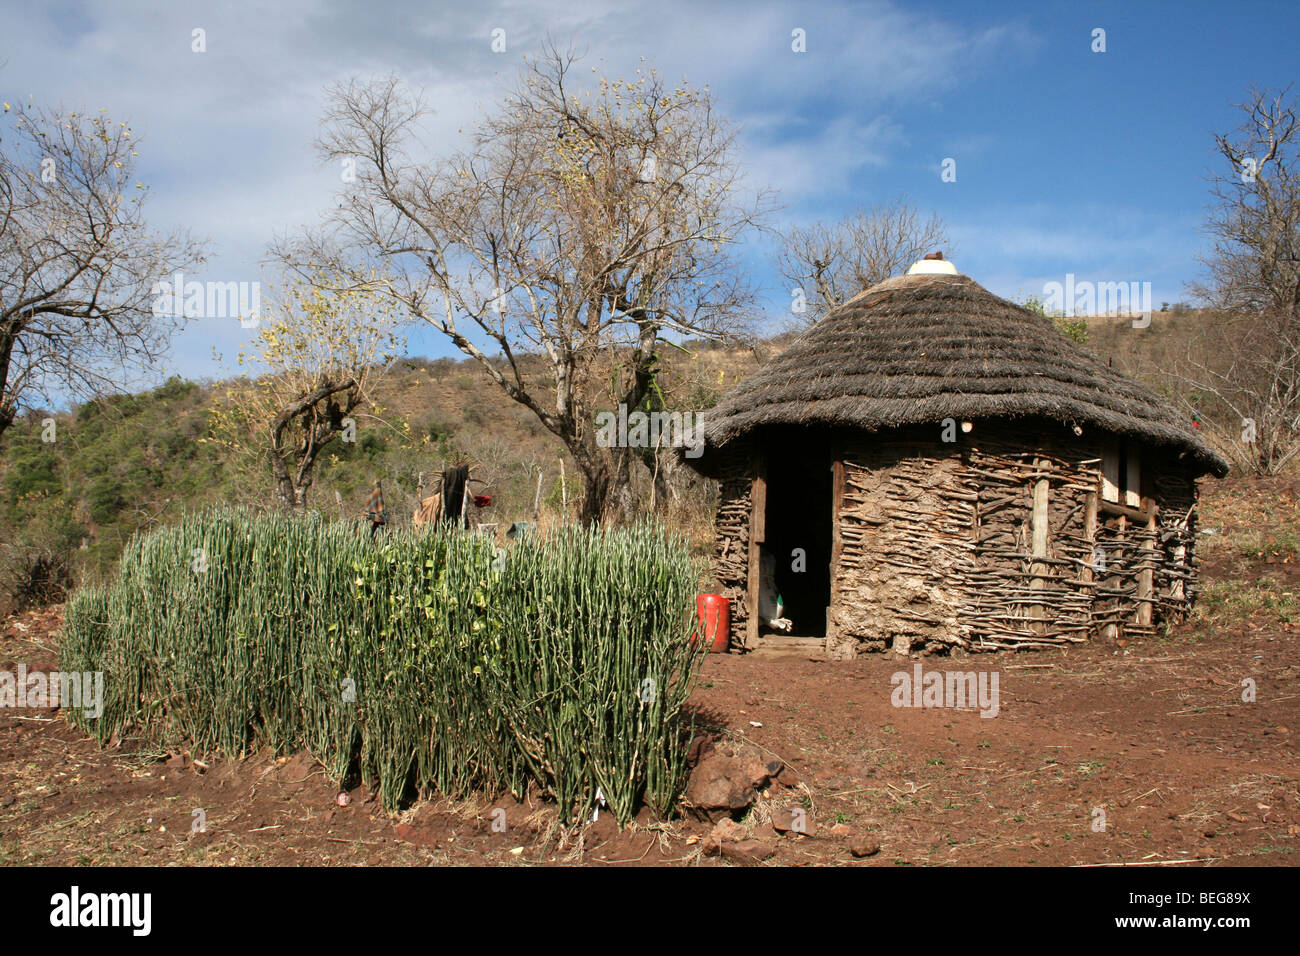 Zulu Village Hut Taken In KwaZulu-Natal Province, South Africa Stock Photo